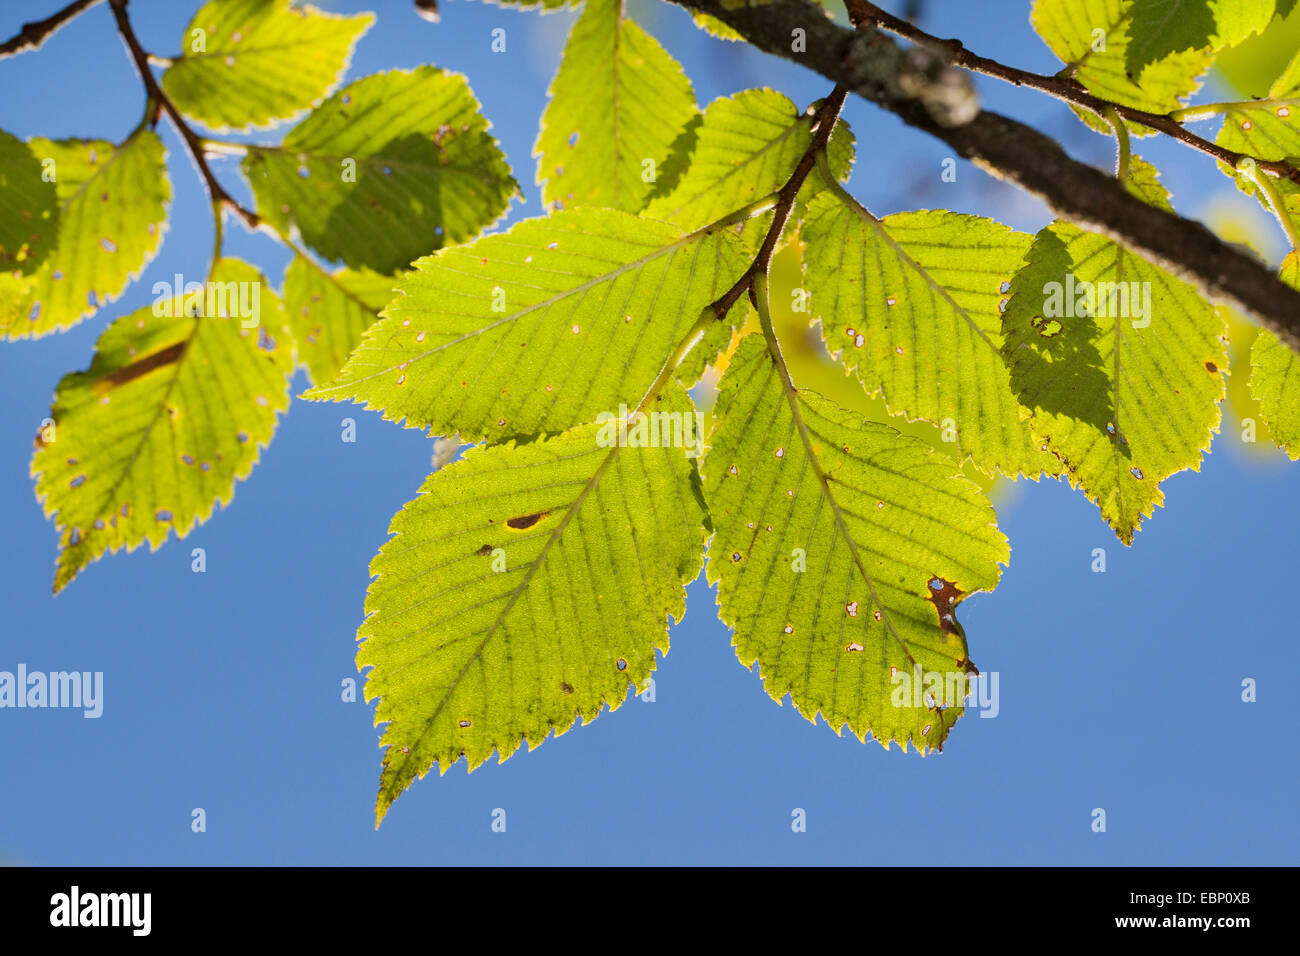 European elm, European White Elm, Fluttering Elm, Spreading Elm, Russian Elm (Ulmus laevis, Ulmus effusa), branch against blue sky, Germany Stock Photo